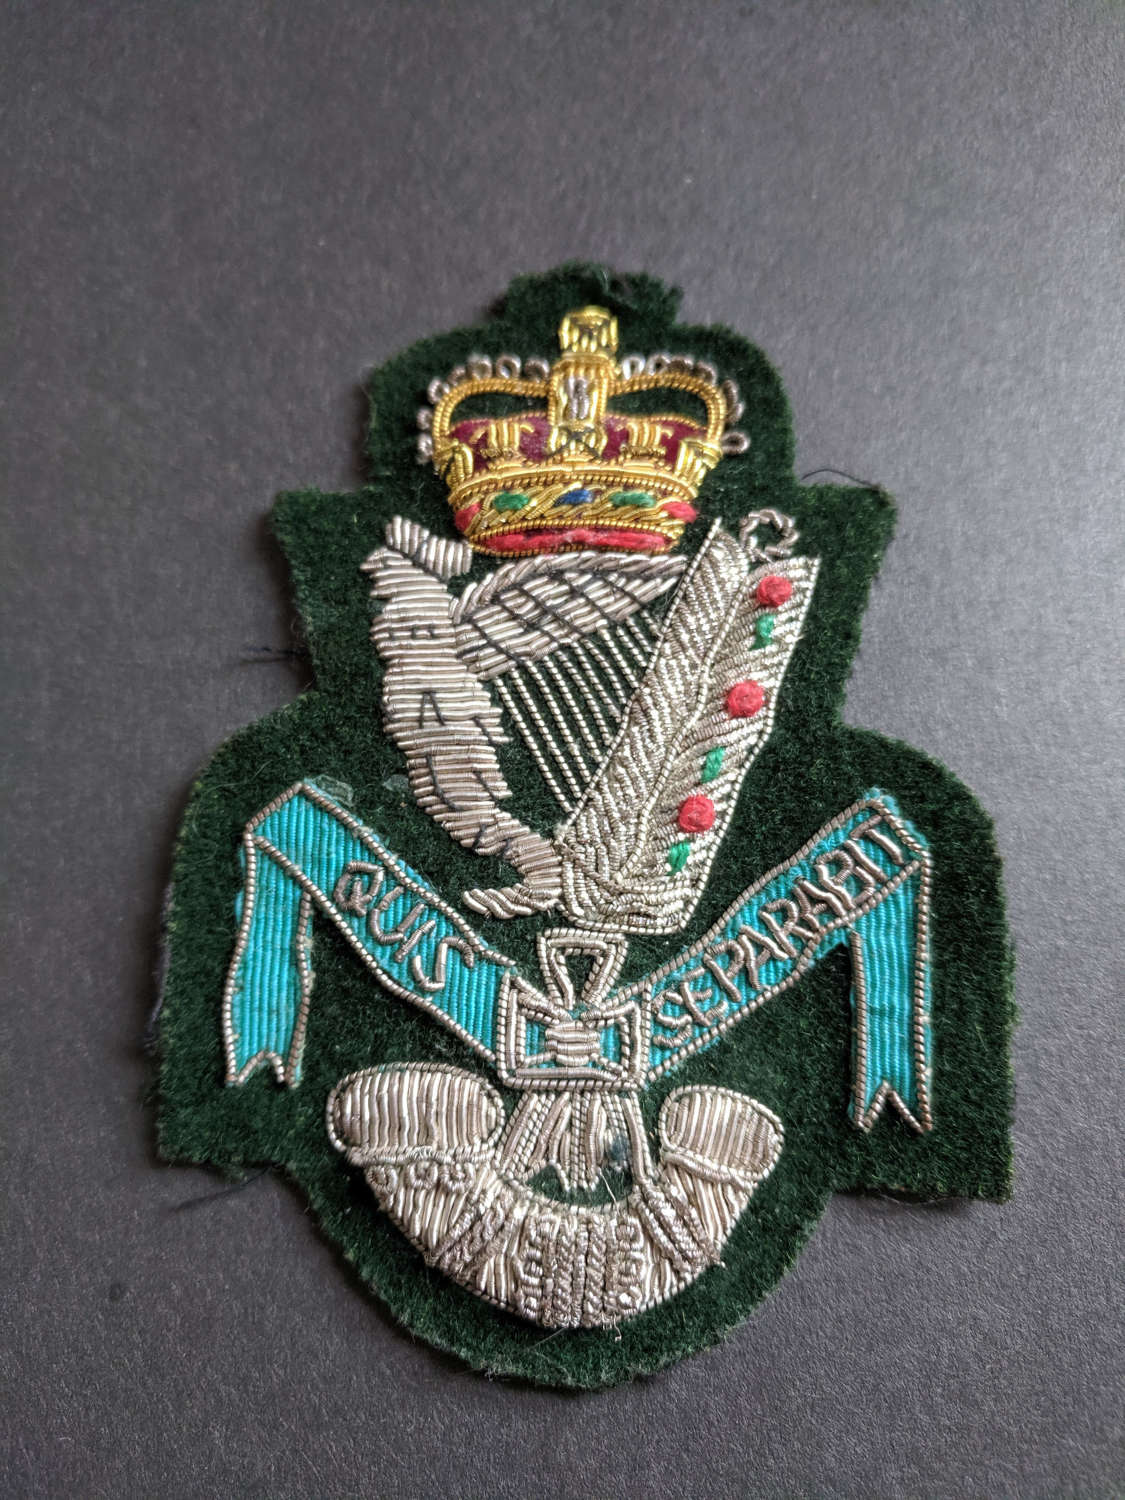 20th Century Royal Ulster Rifles Association Blazer Badge